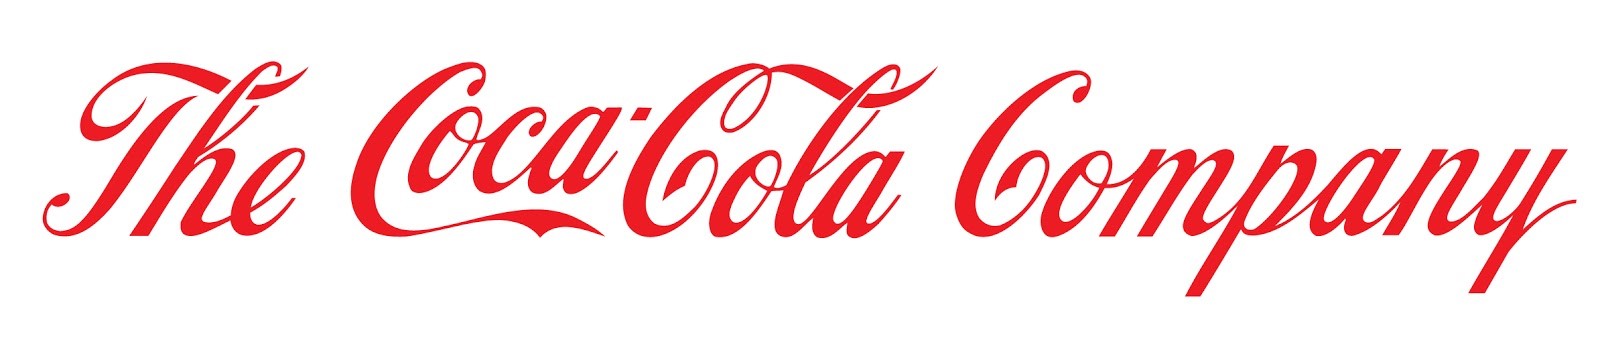 Coca-Cola_Company_Logo.jpg